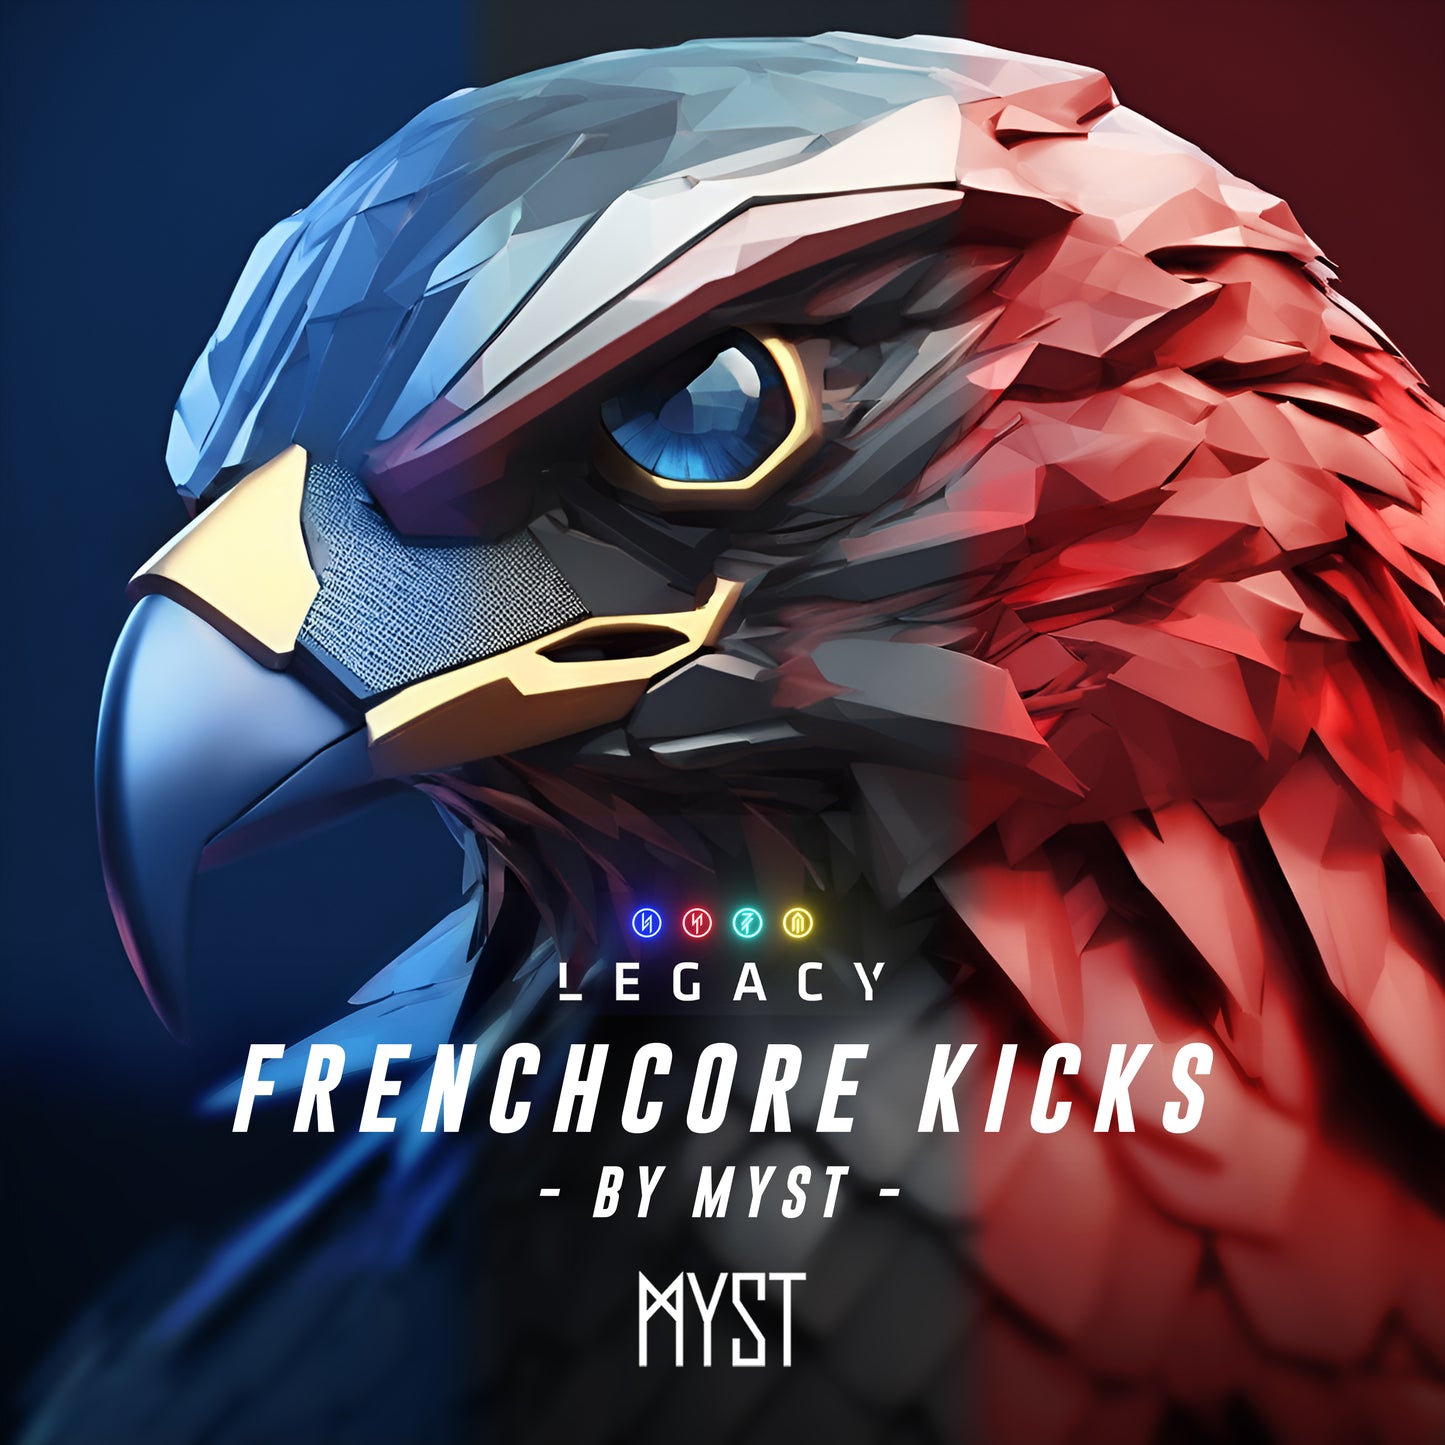 LEGACY - Frenchcore kicks by MYST